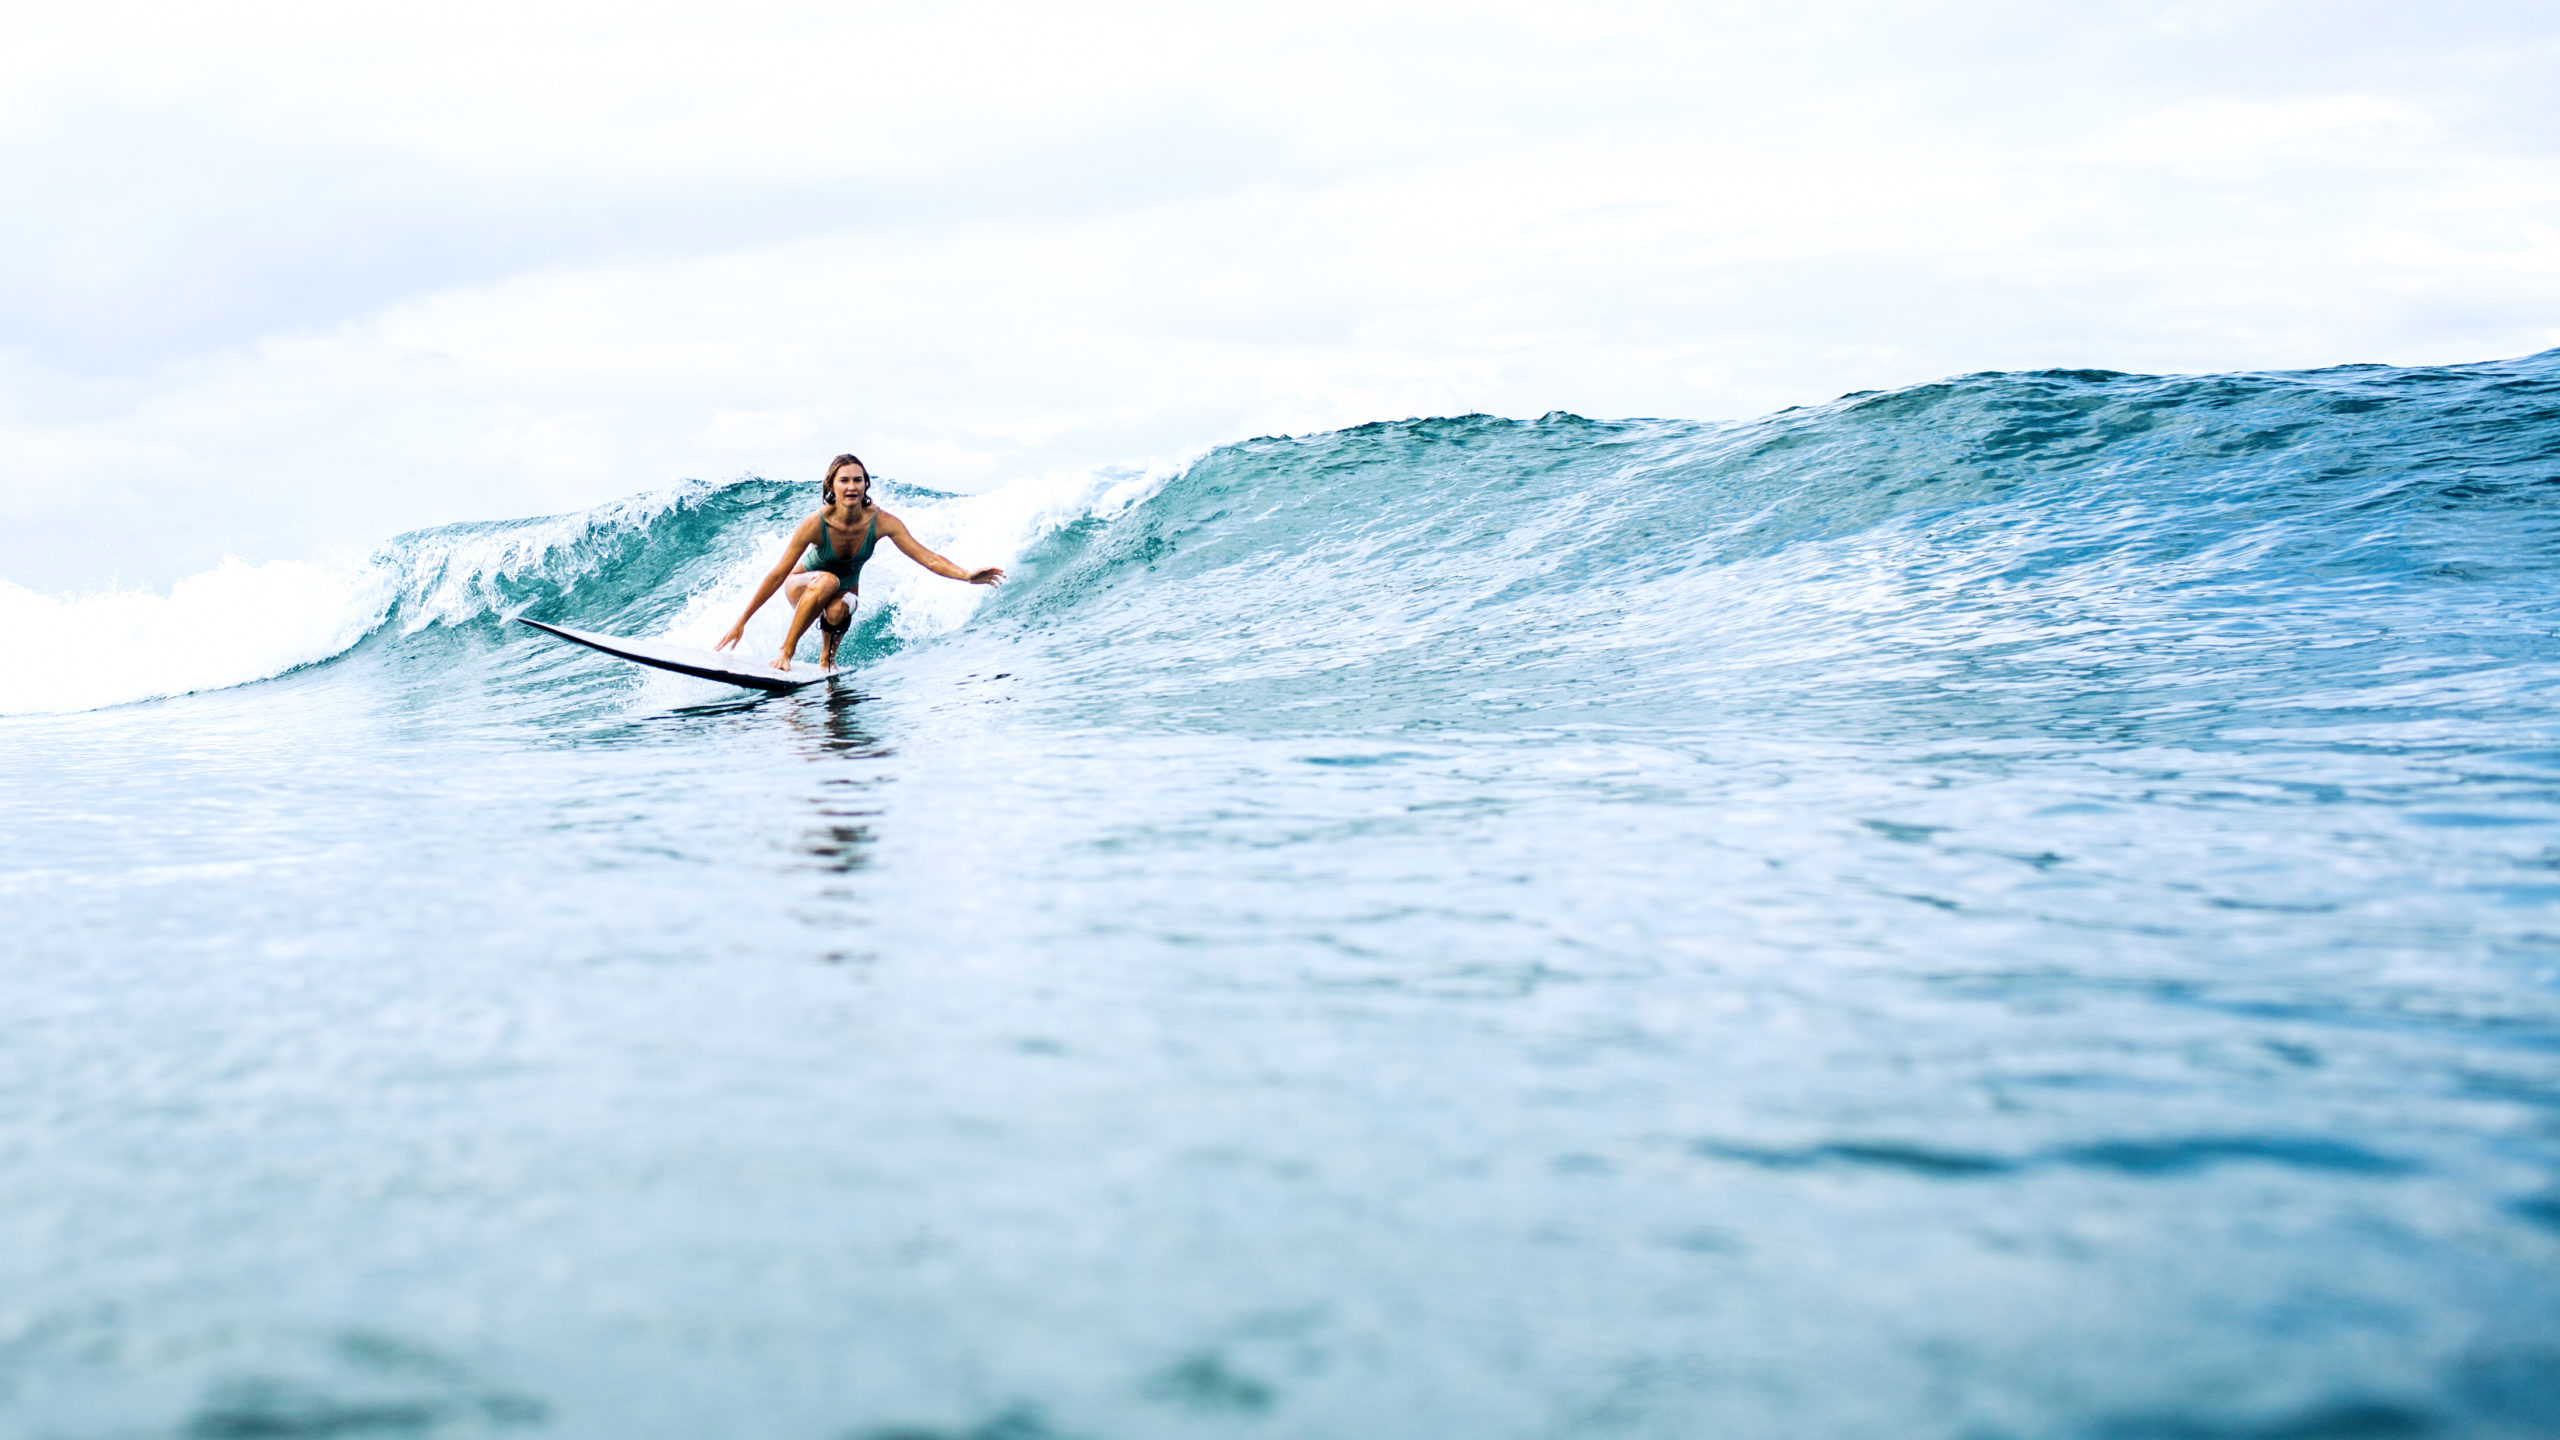 beautiful surfer girl riding on a board in the ocean on bali island